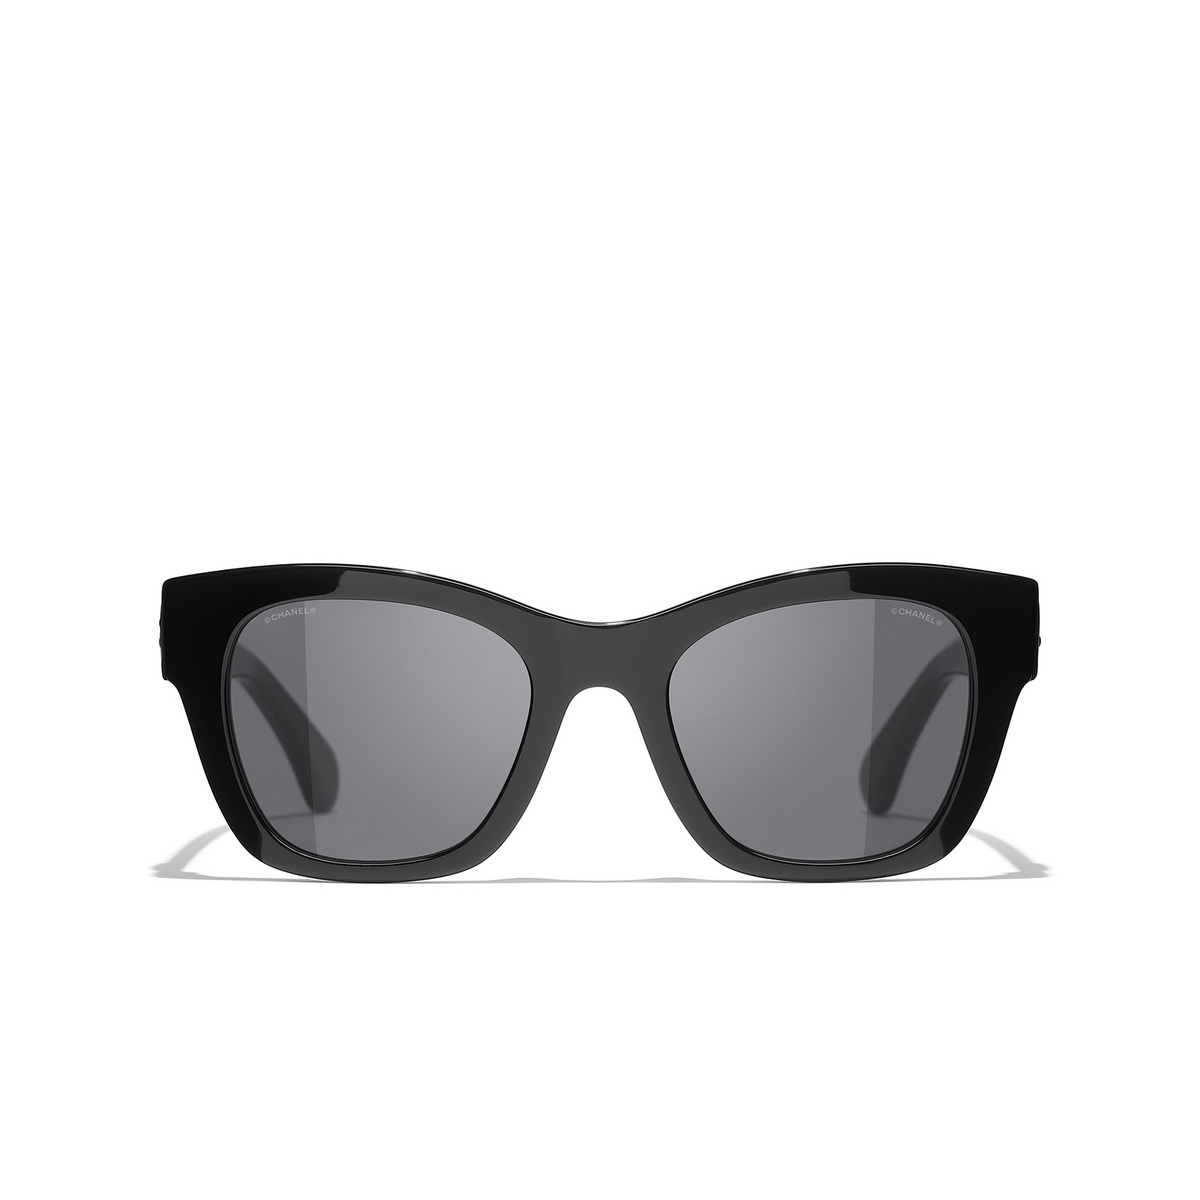 CHANEL square Sunglasses C501S4 Black - front view